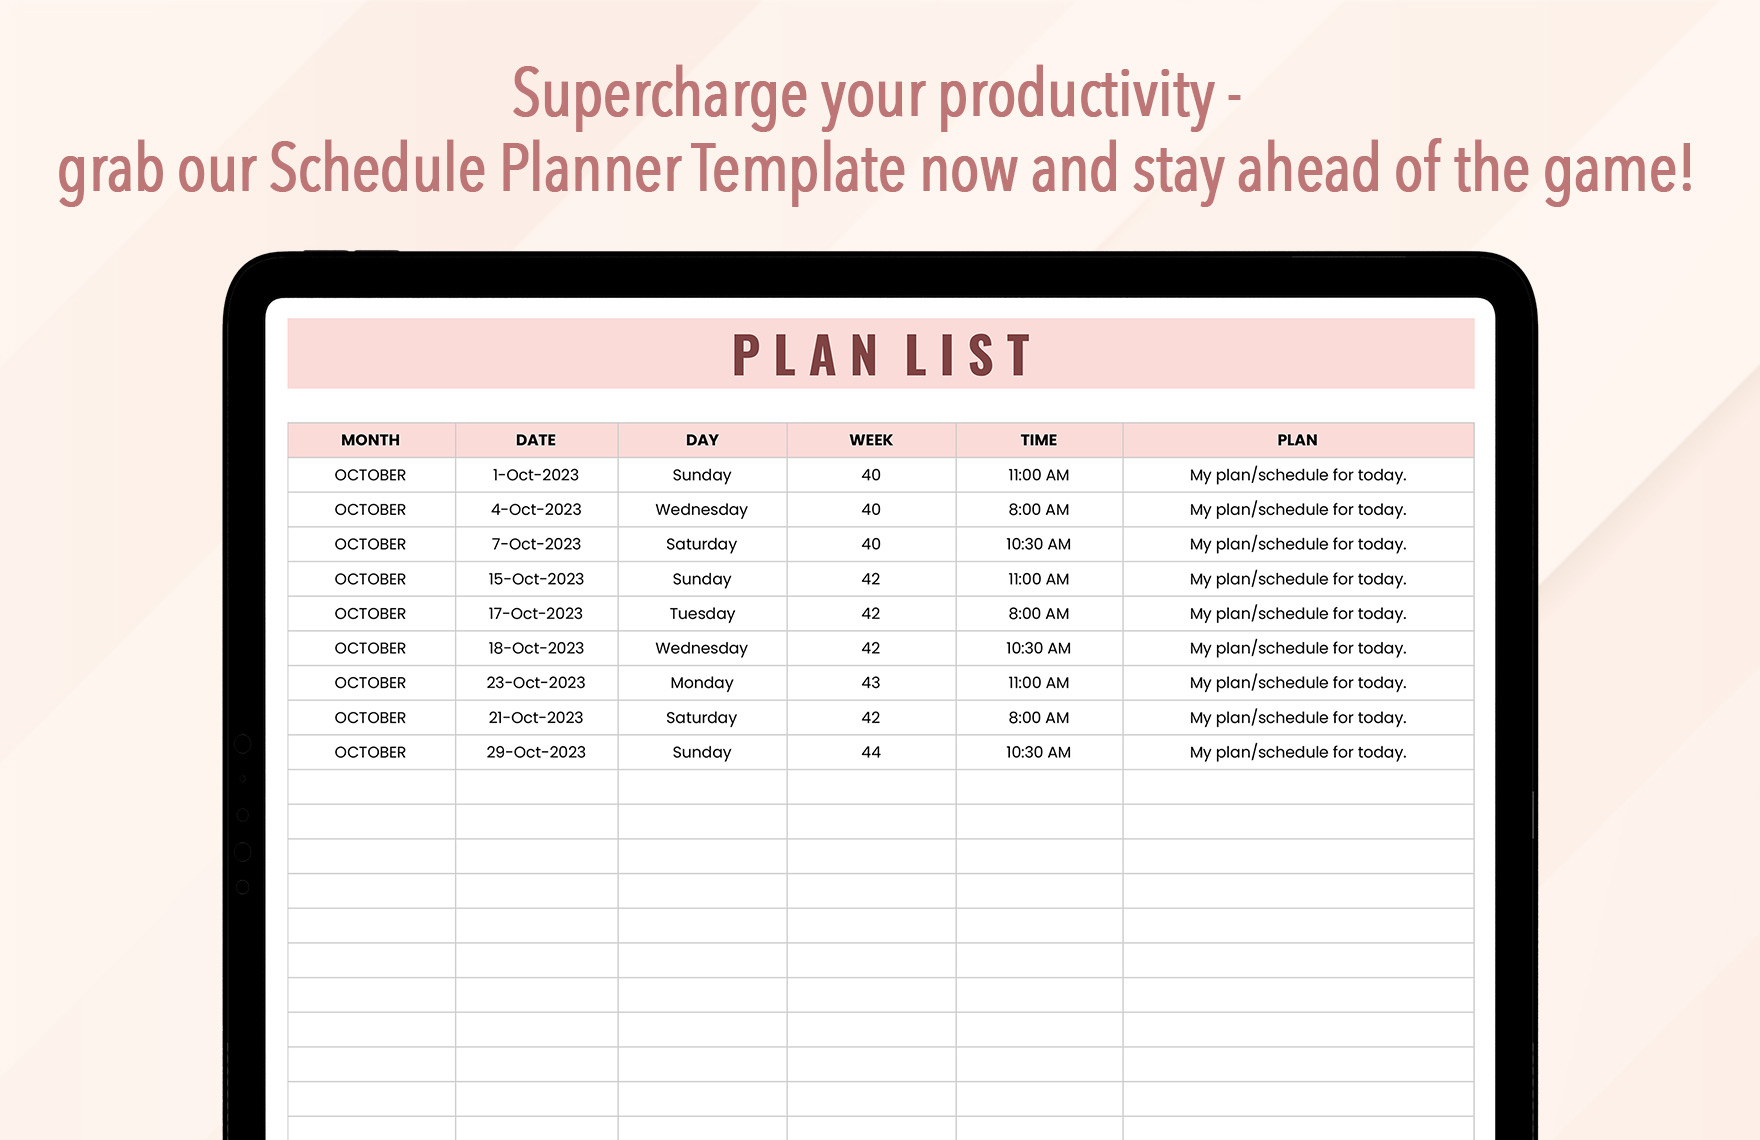 Schedule Planner Template